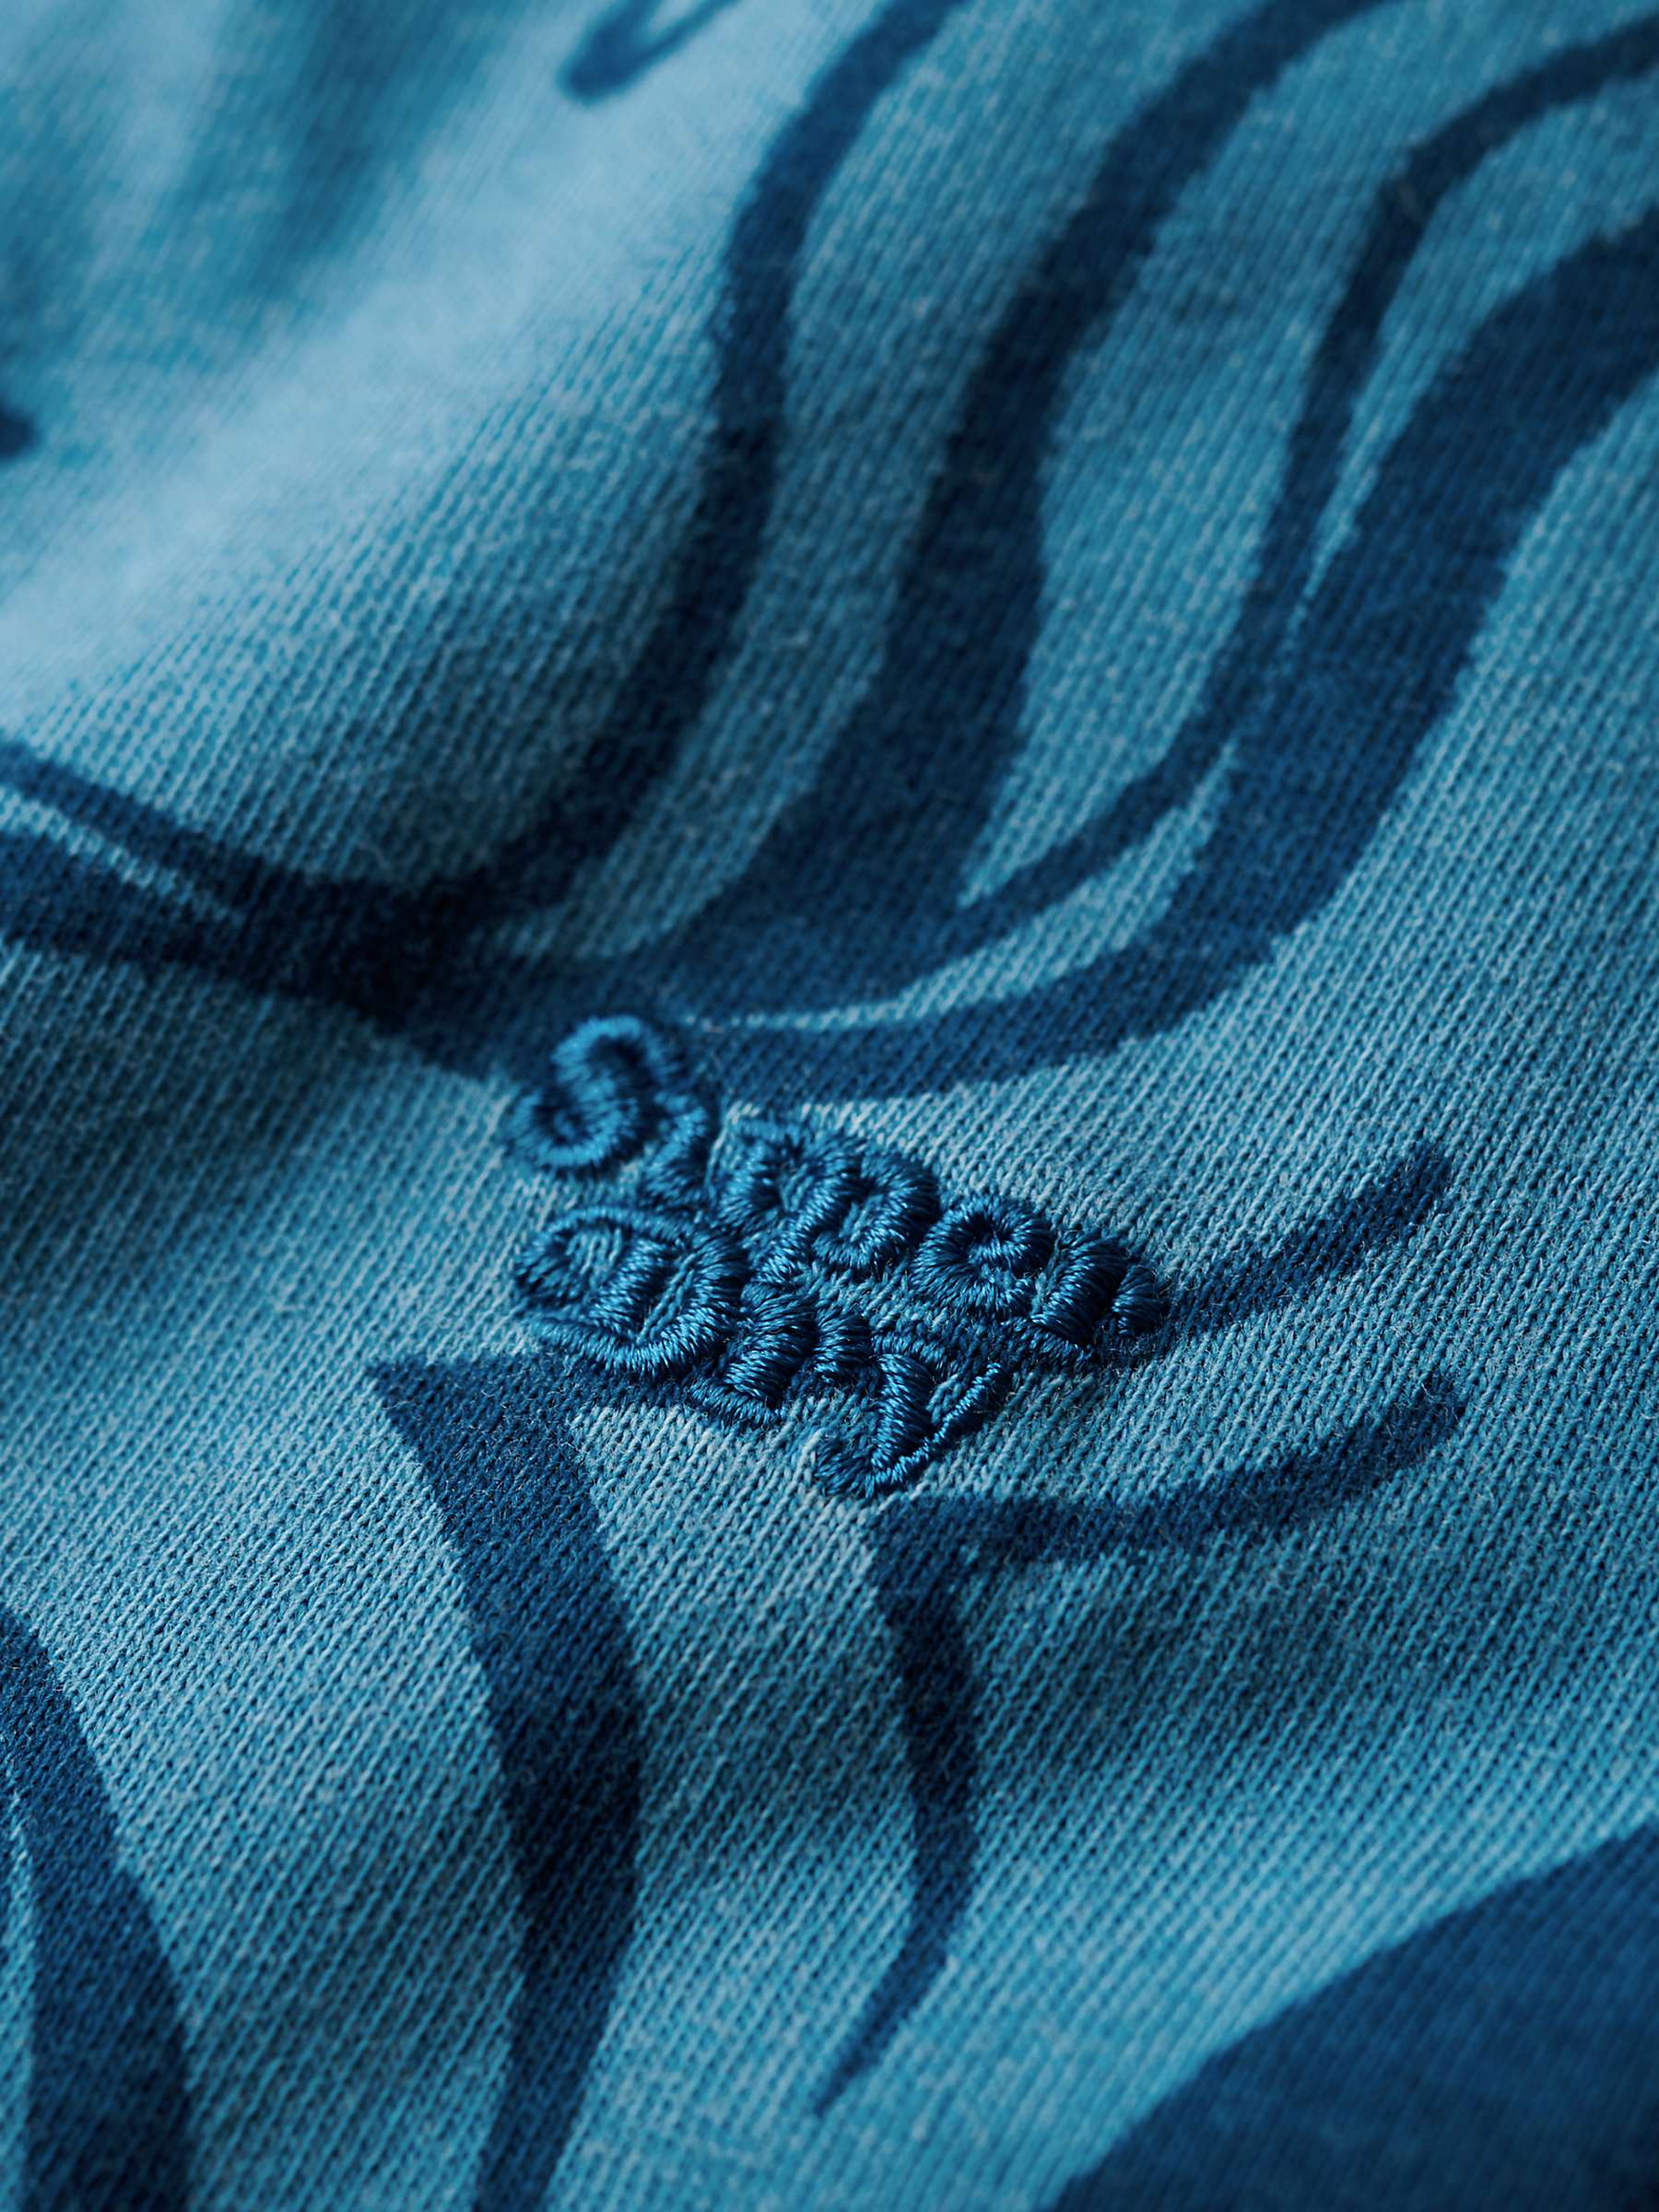 Buy Superdry Vintage Overdyed Printed T-Shirt, Quayside Blue Online at johnlewis.com